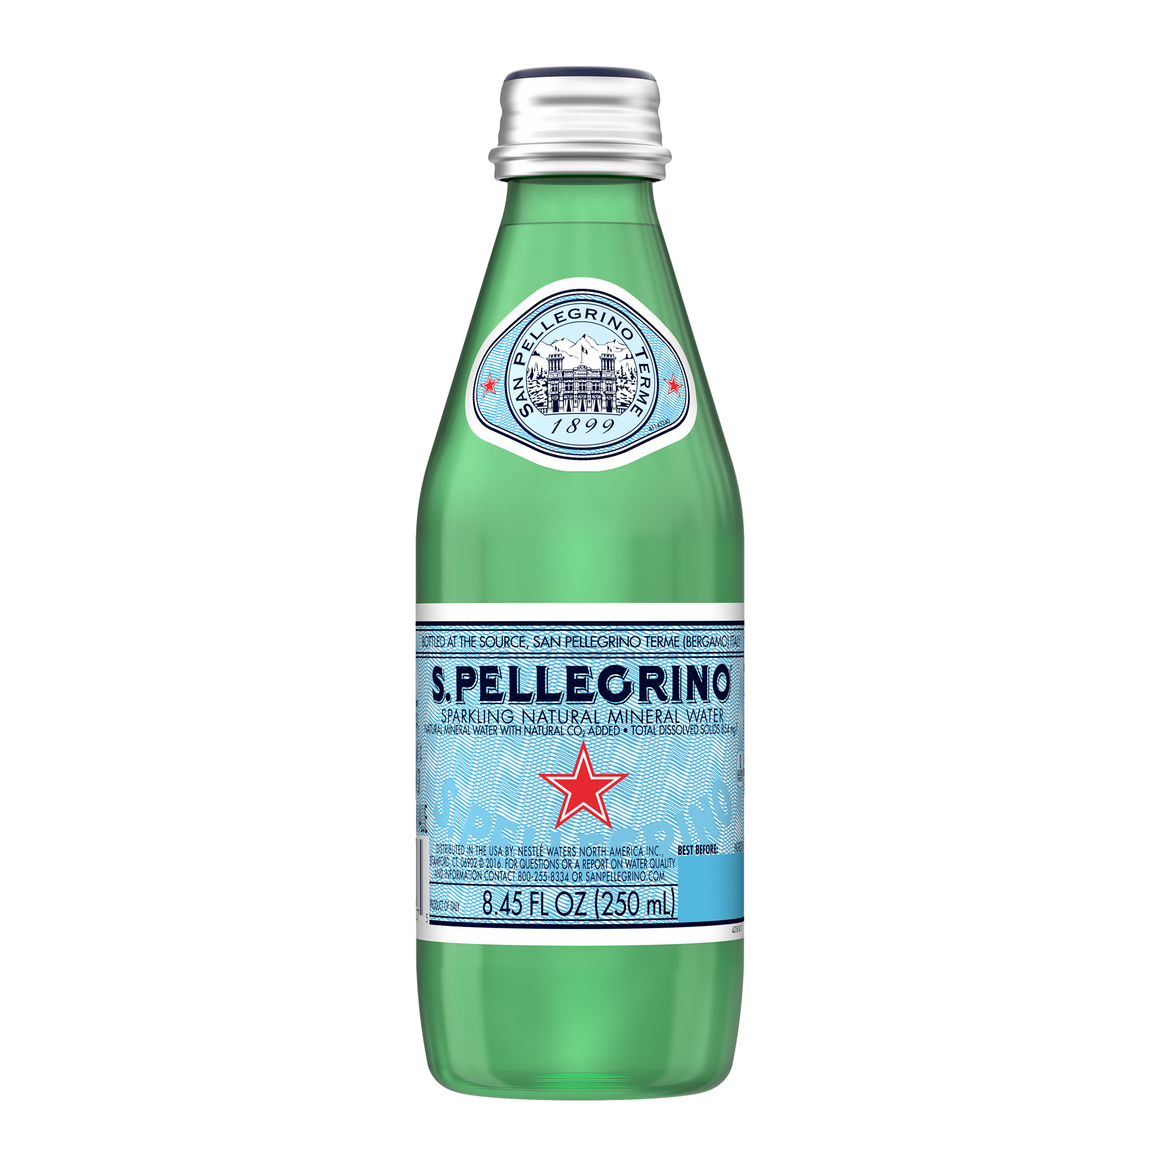 SAN PELLEGRINO SPARKLING WATER (GLASS) 250ml - Premier Cru Retail Stores